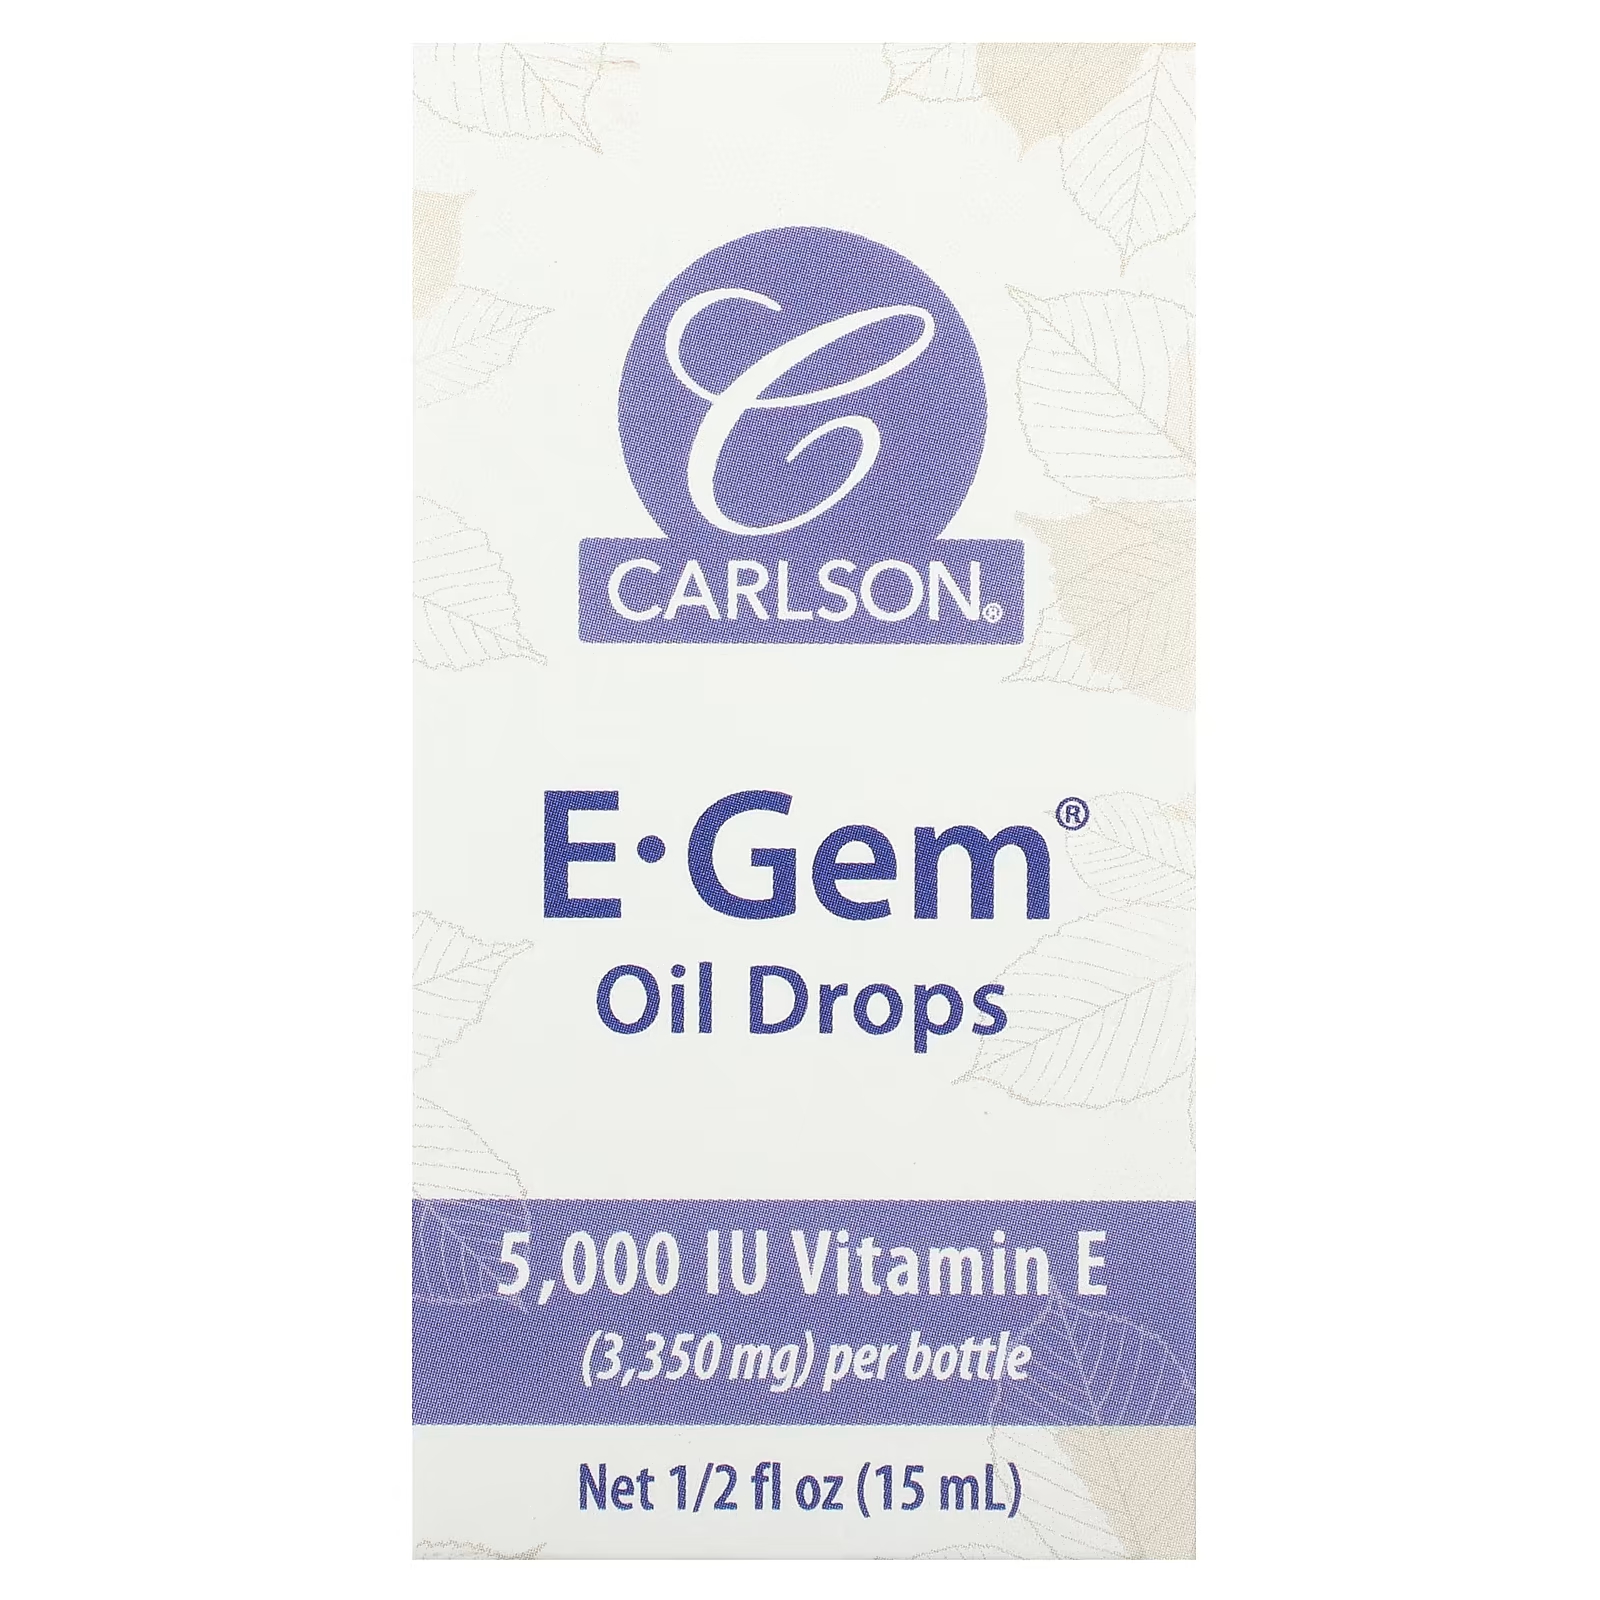 Пищевая добавка Carlson E-Gem Oil Drops с витамином Е, 15 мл bellamy e looking backward 2000 1887